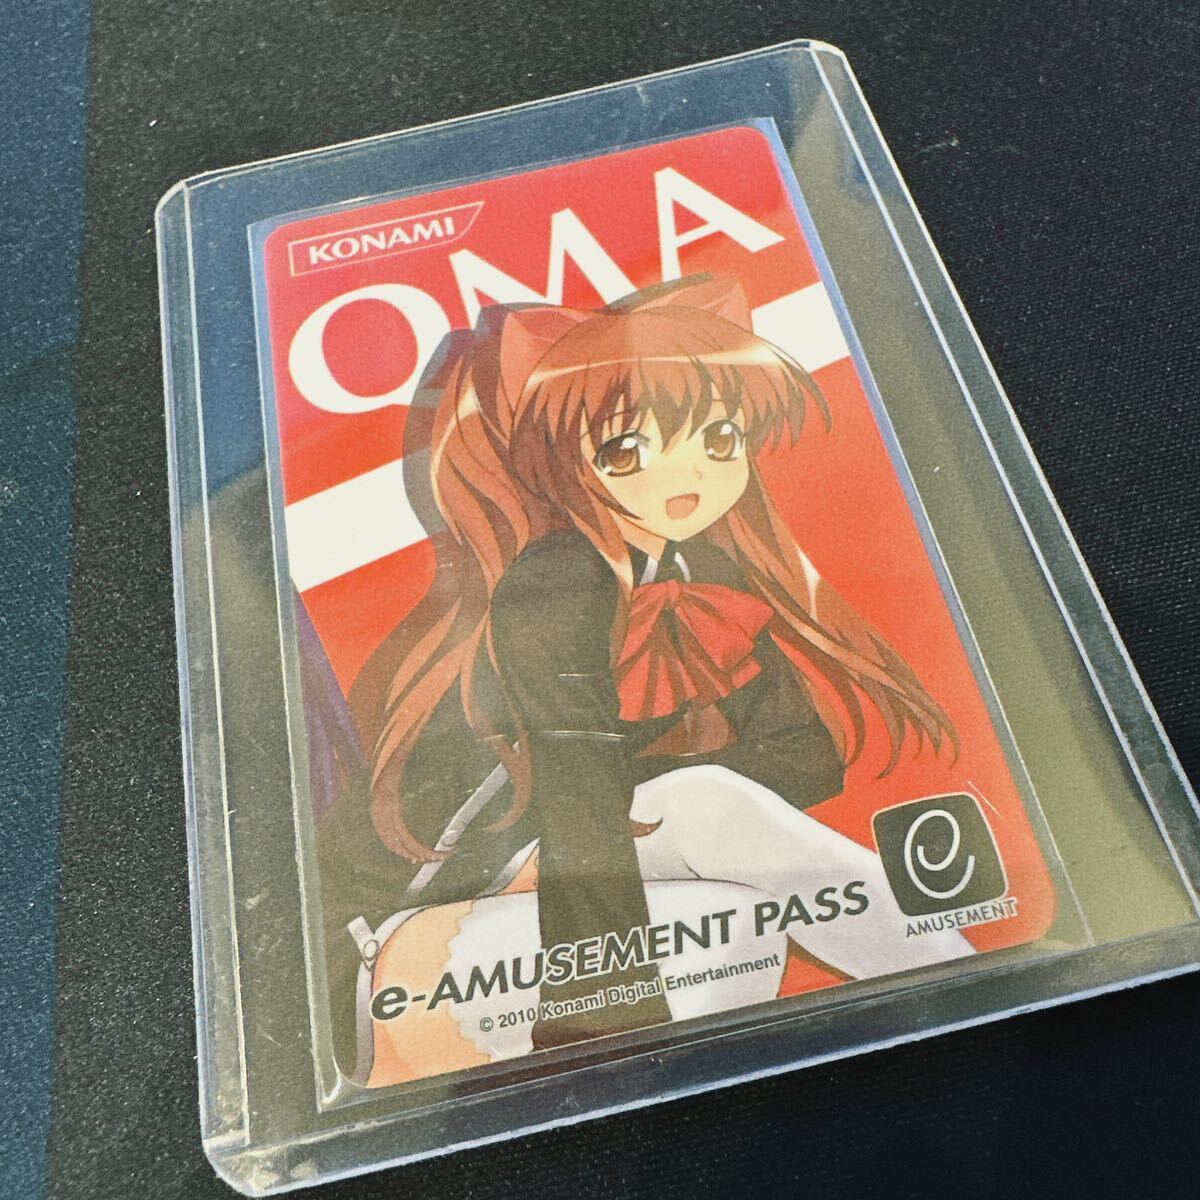 e-amusement pass コナミ KONAMI QMA クイズマジックアカデミー アロエ